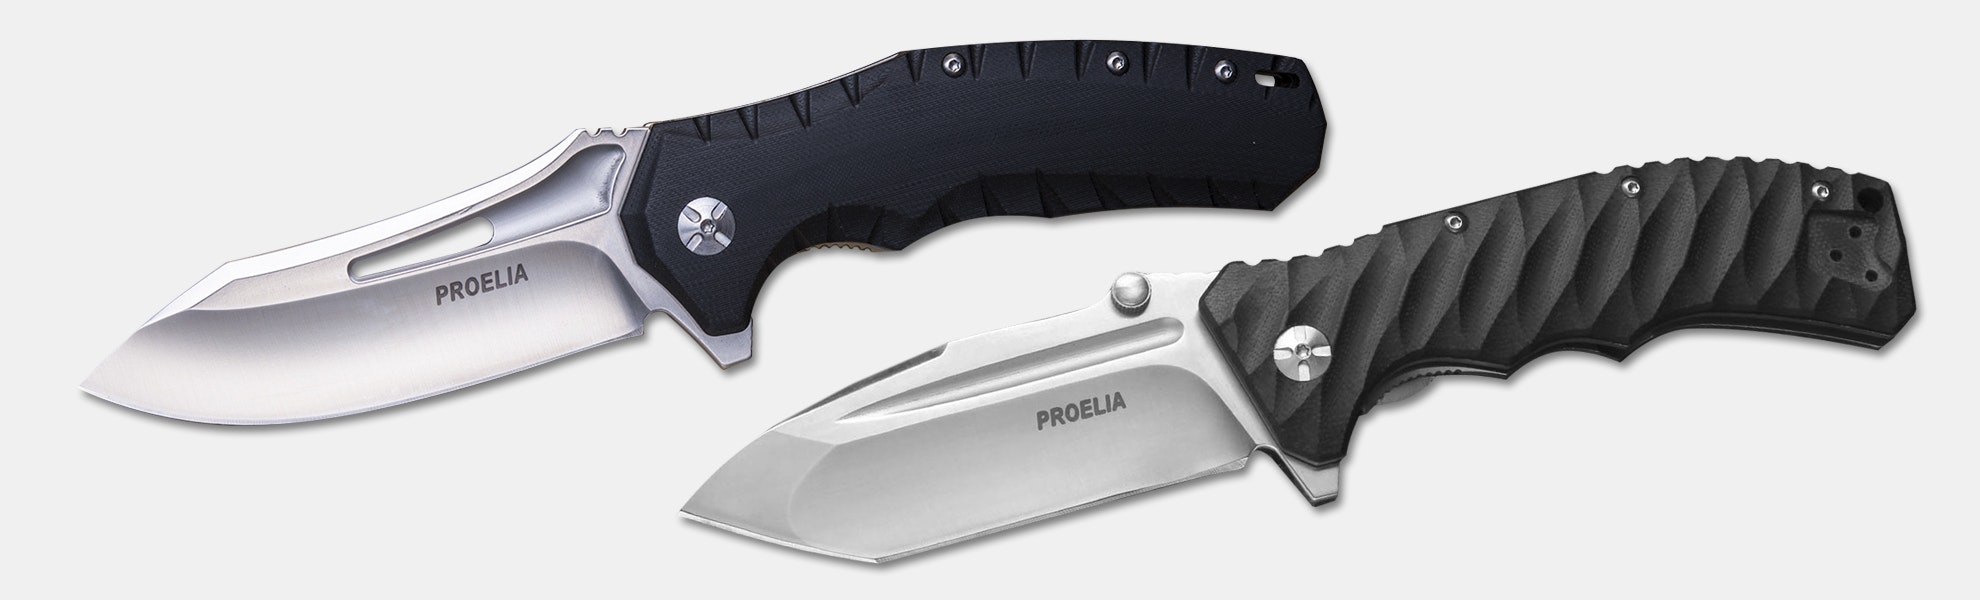 usa made proelia folding knives